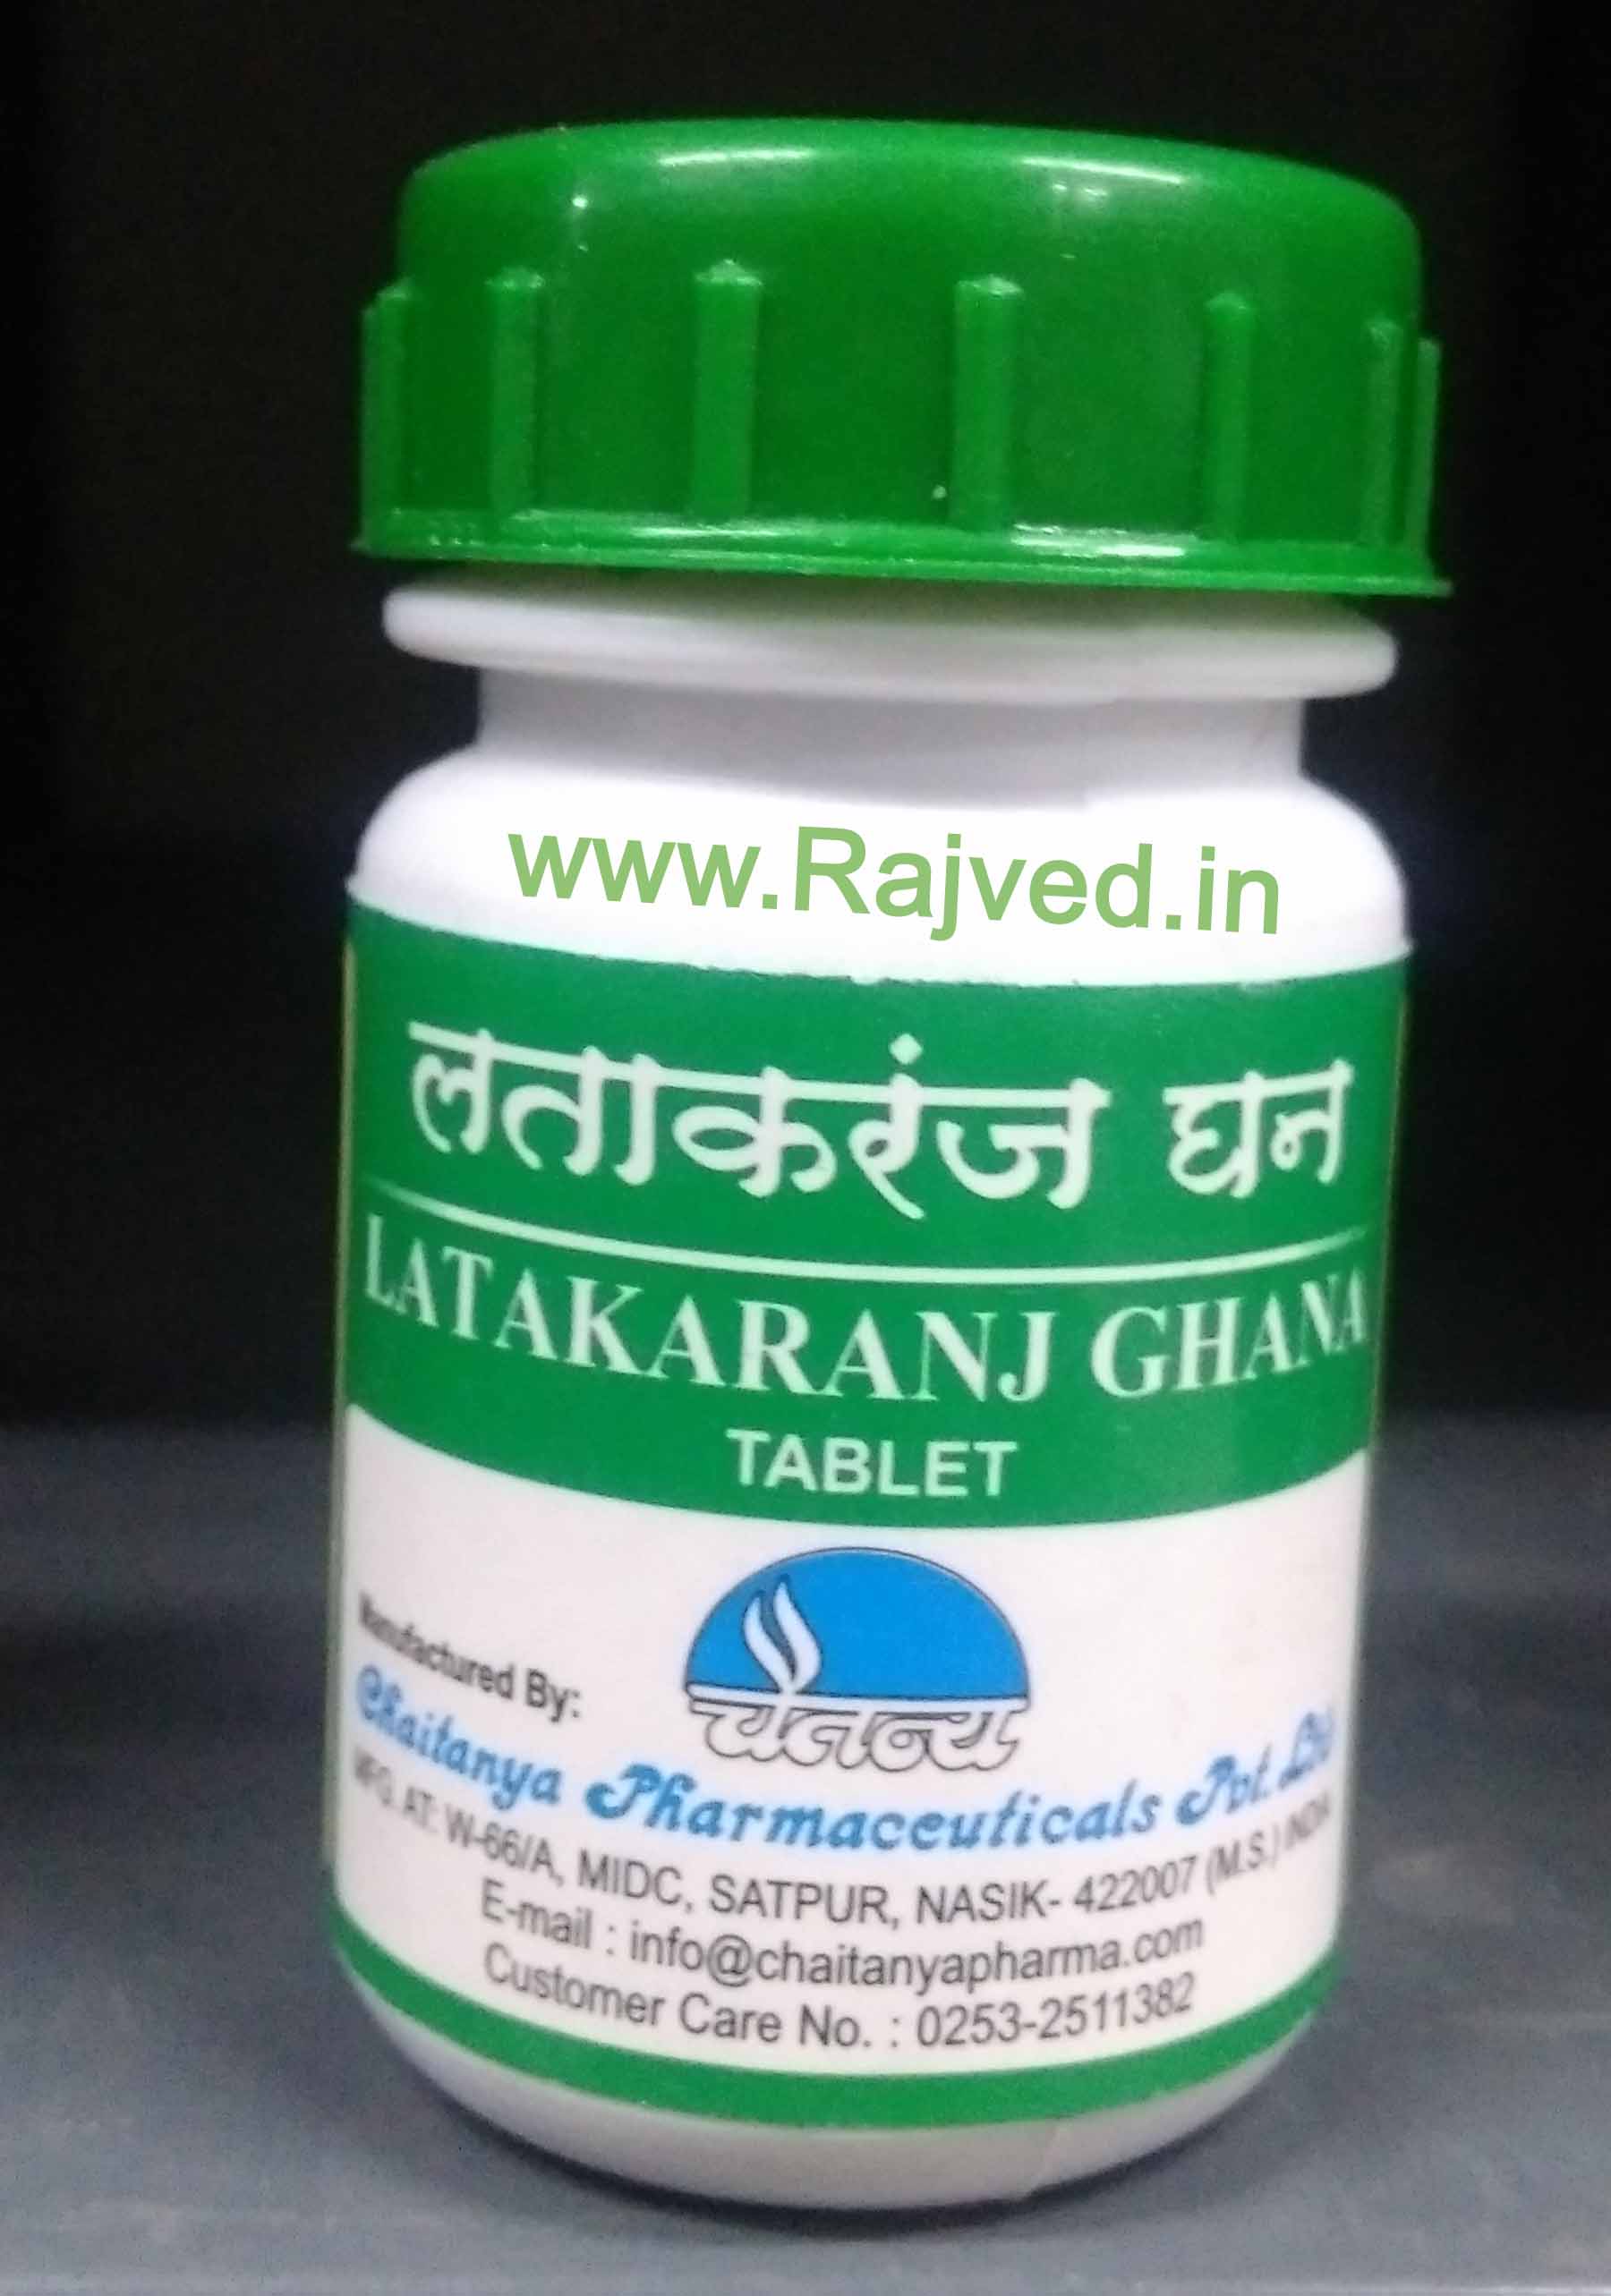 latakaranj ghana 500tab upto 20% off free shipping chaitanya pharmaceuticals